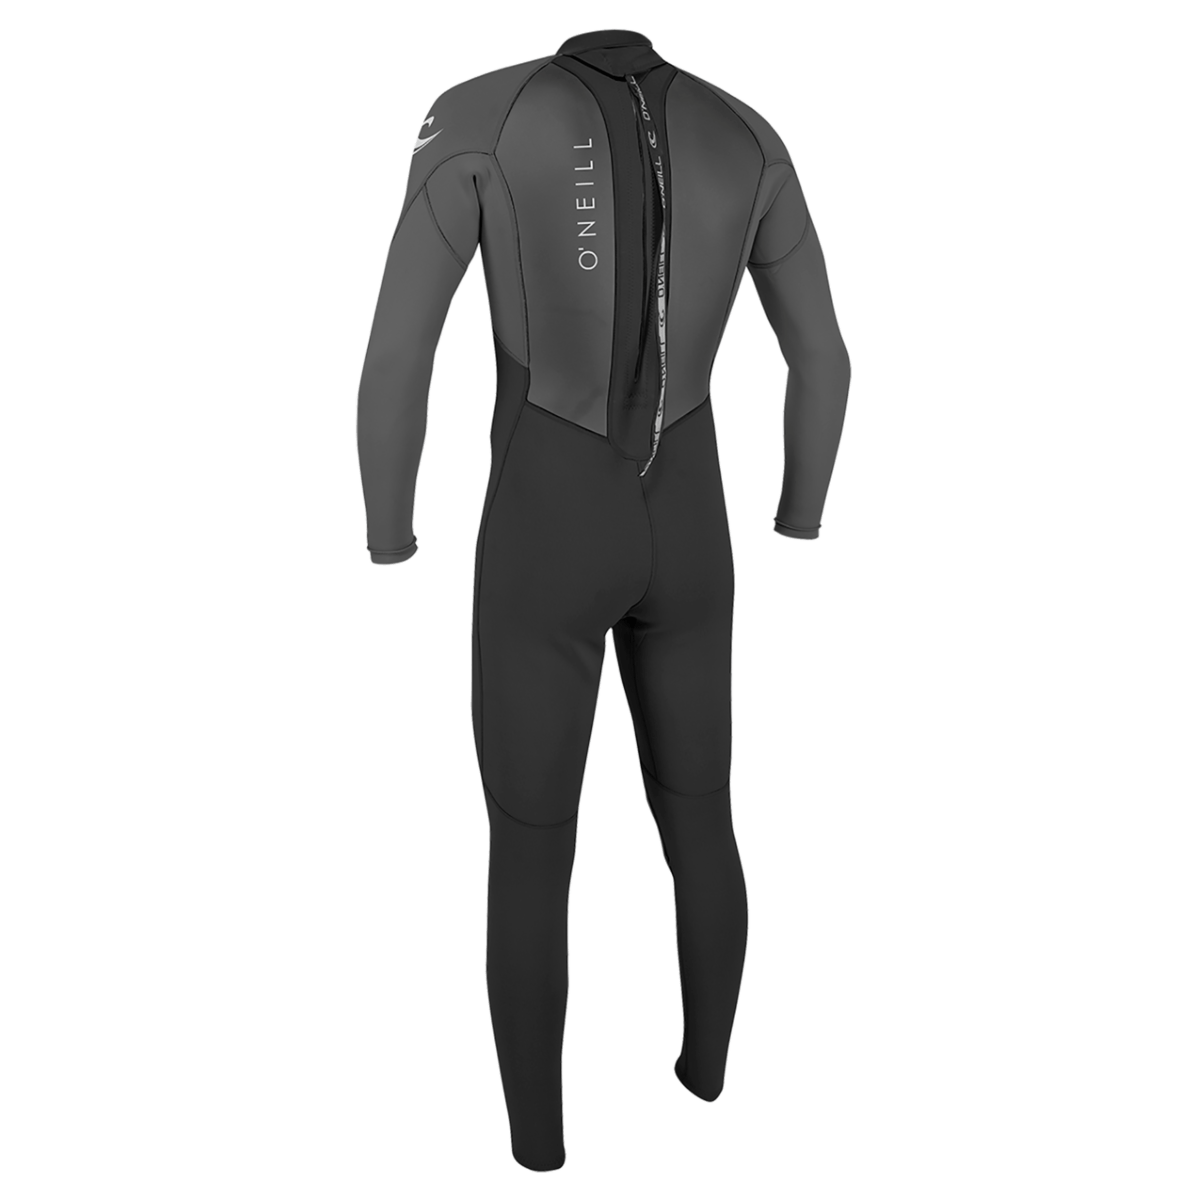 O'Neill Reactor-2 3/2mm BZ Full Wetsuit in Black/Graphite - BoardCo